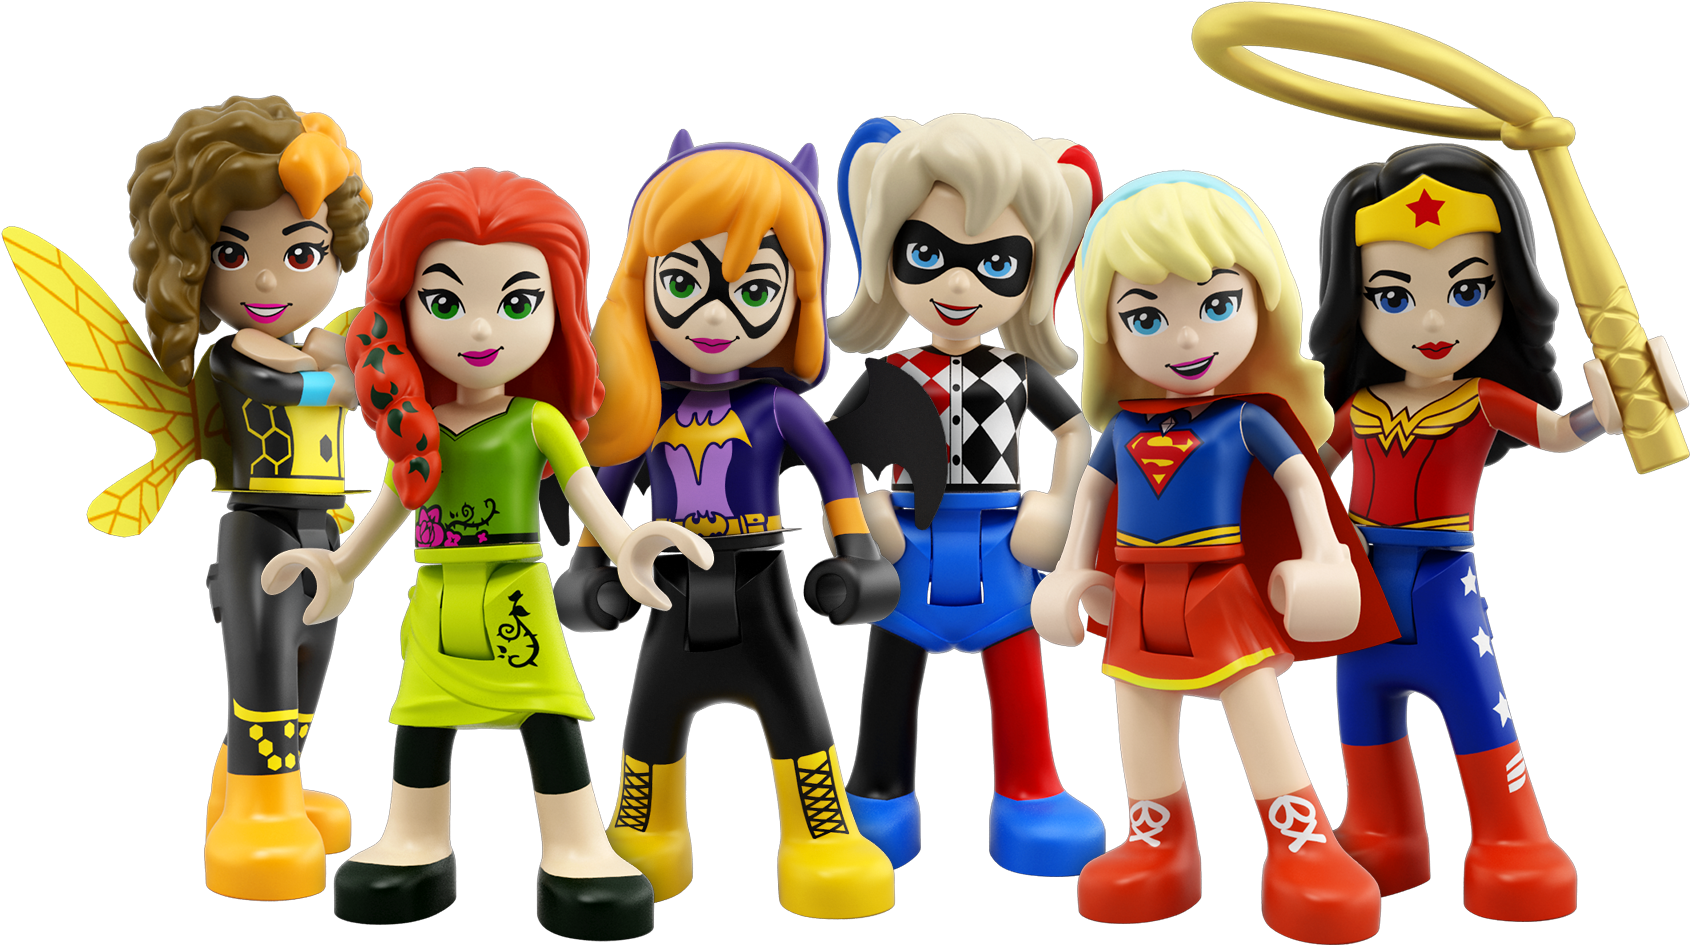 2mib, 1730x972, Dcshg Legos - Lego Super Heroes Girl (1730x972)